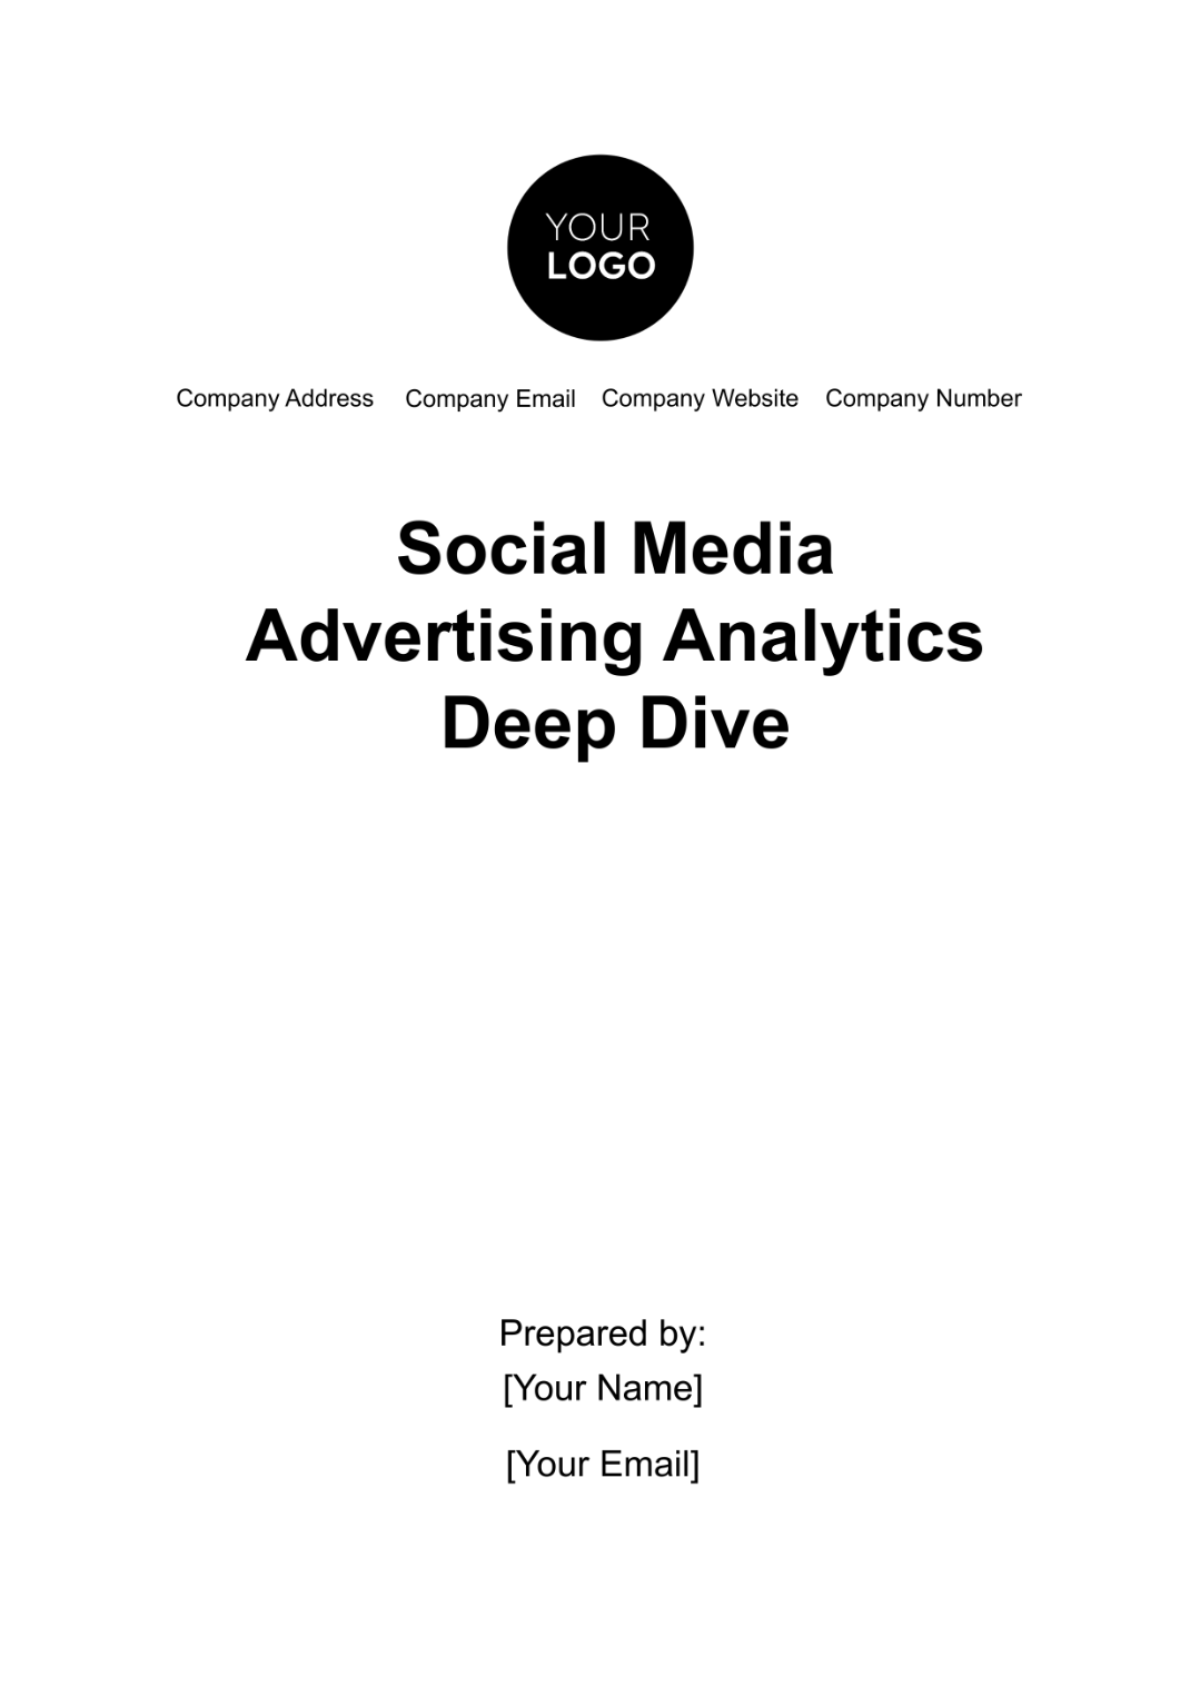 Social Media Advertising Analytics Deep Dive Template